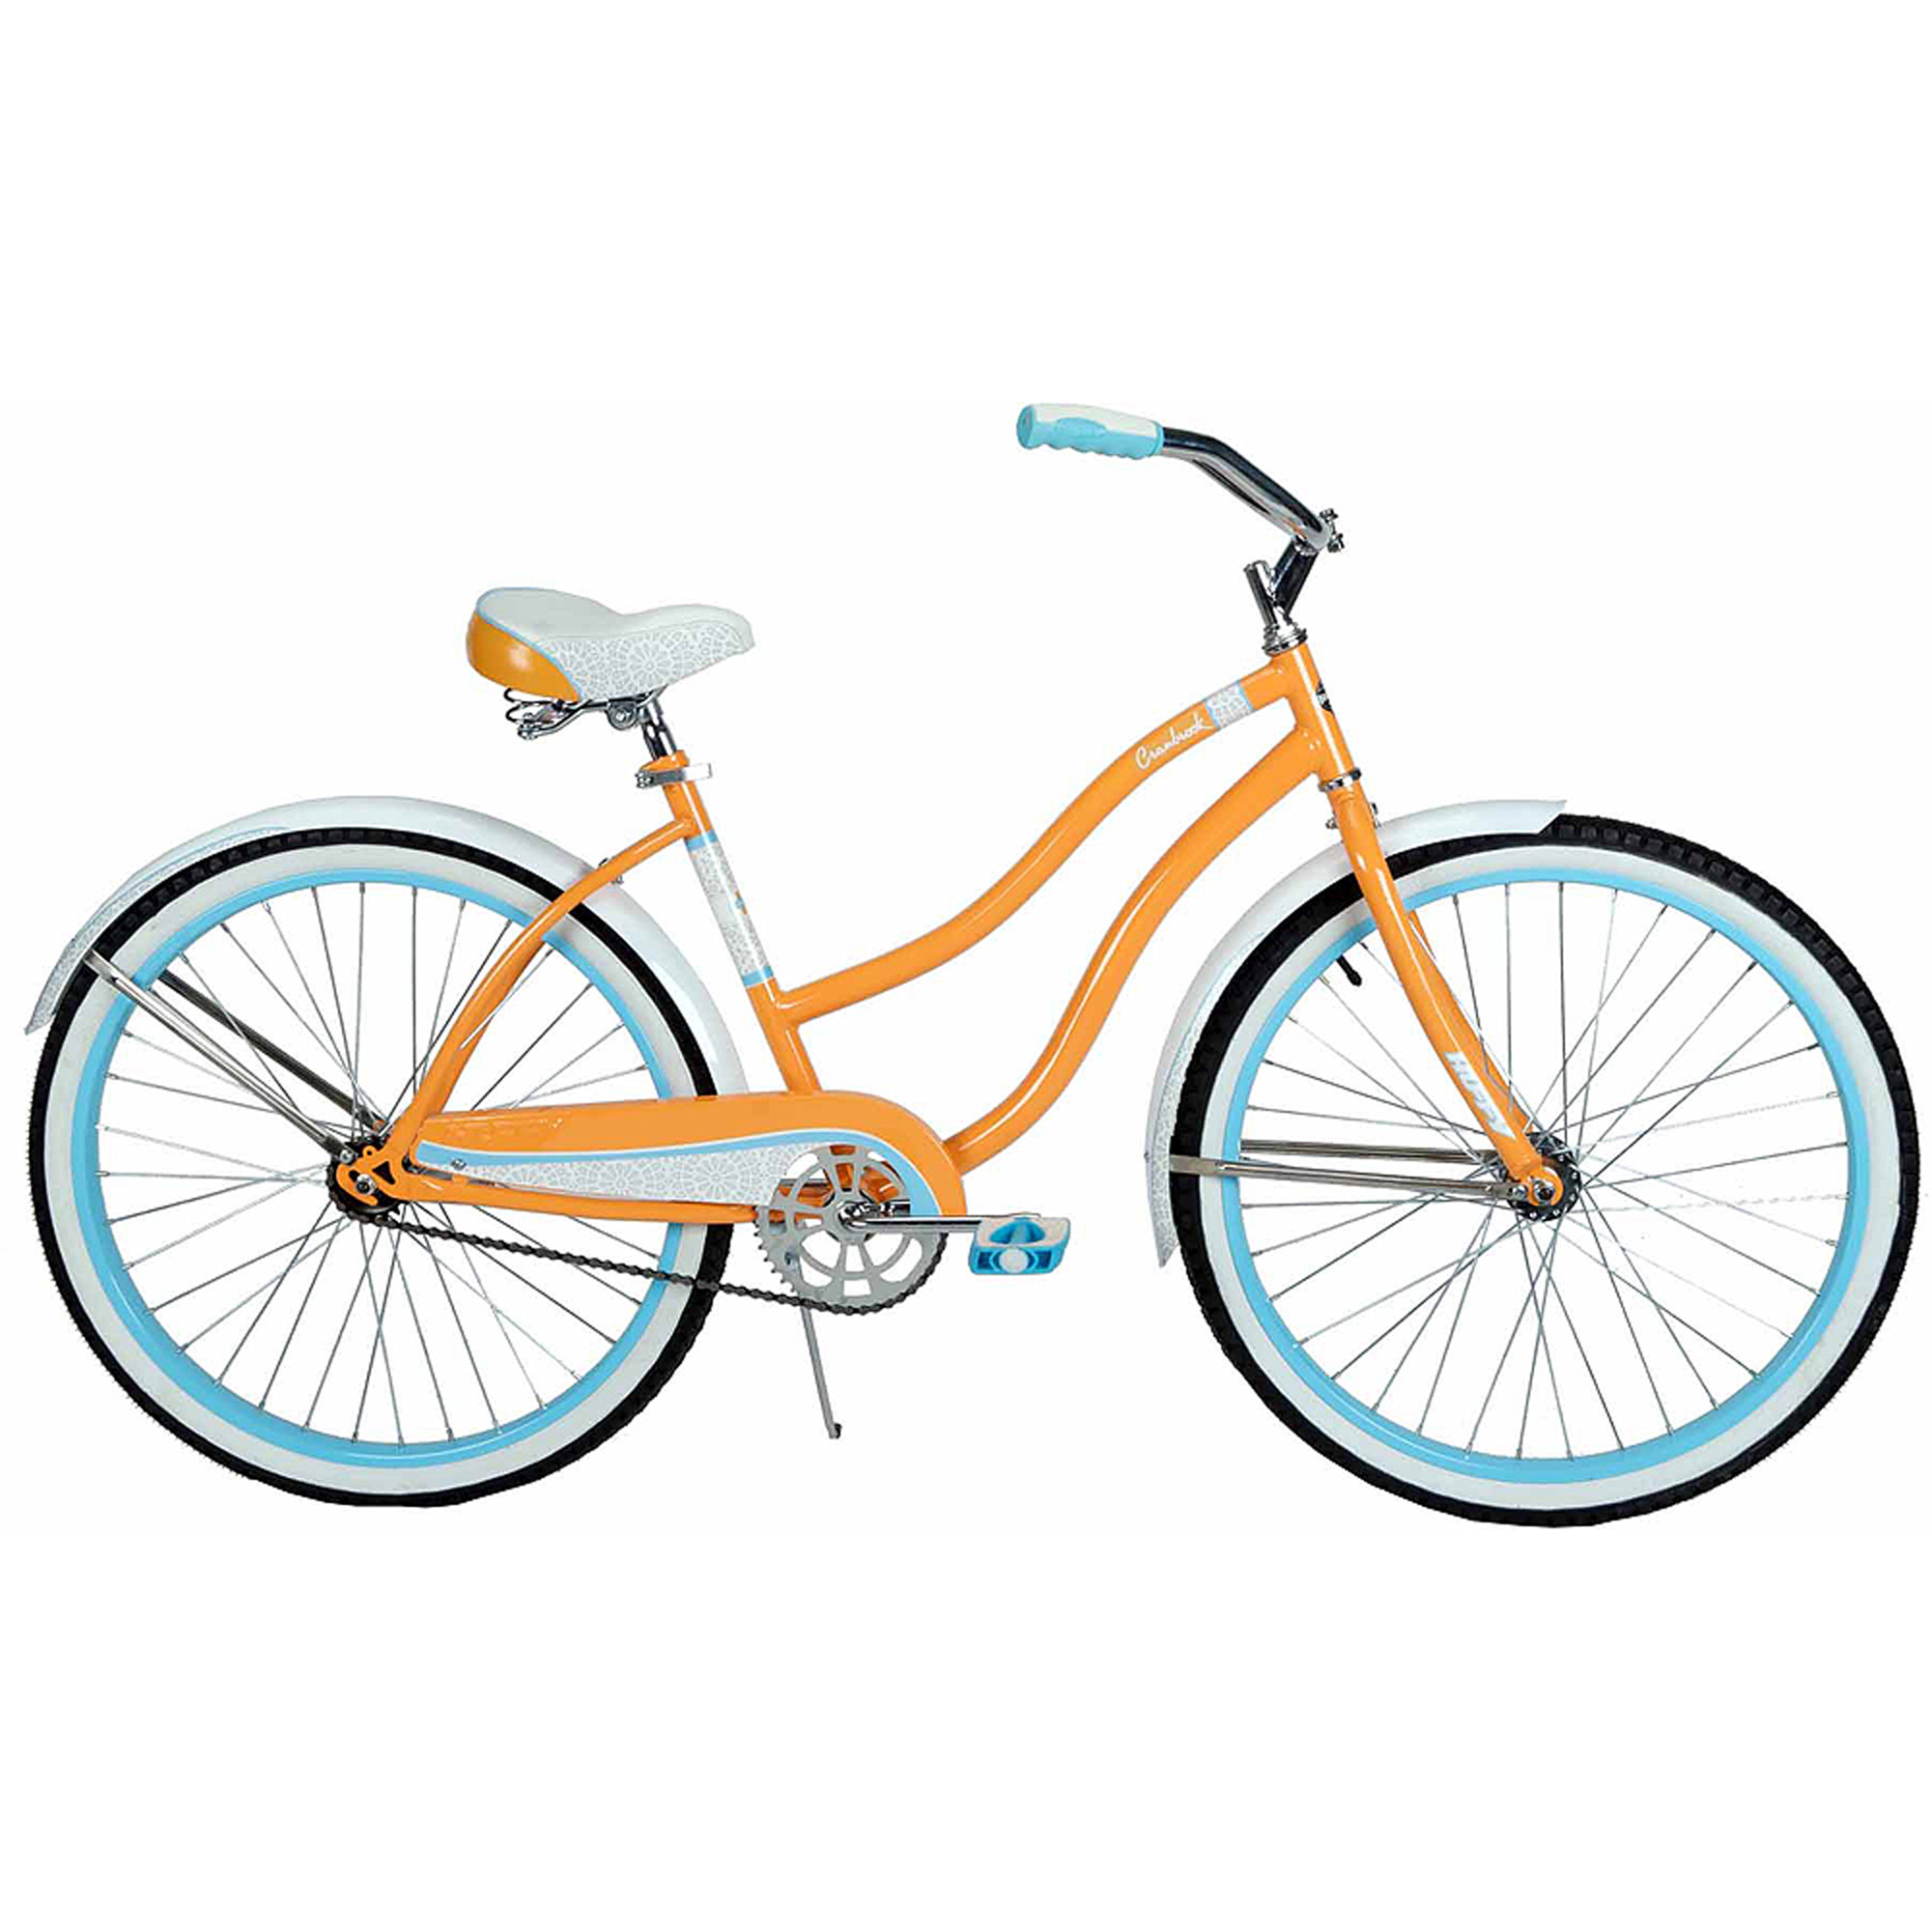 26" Huffy Cranbrook Women's Cruiser Bike, Orange Sherbet - image 1 of 2